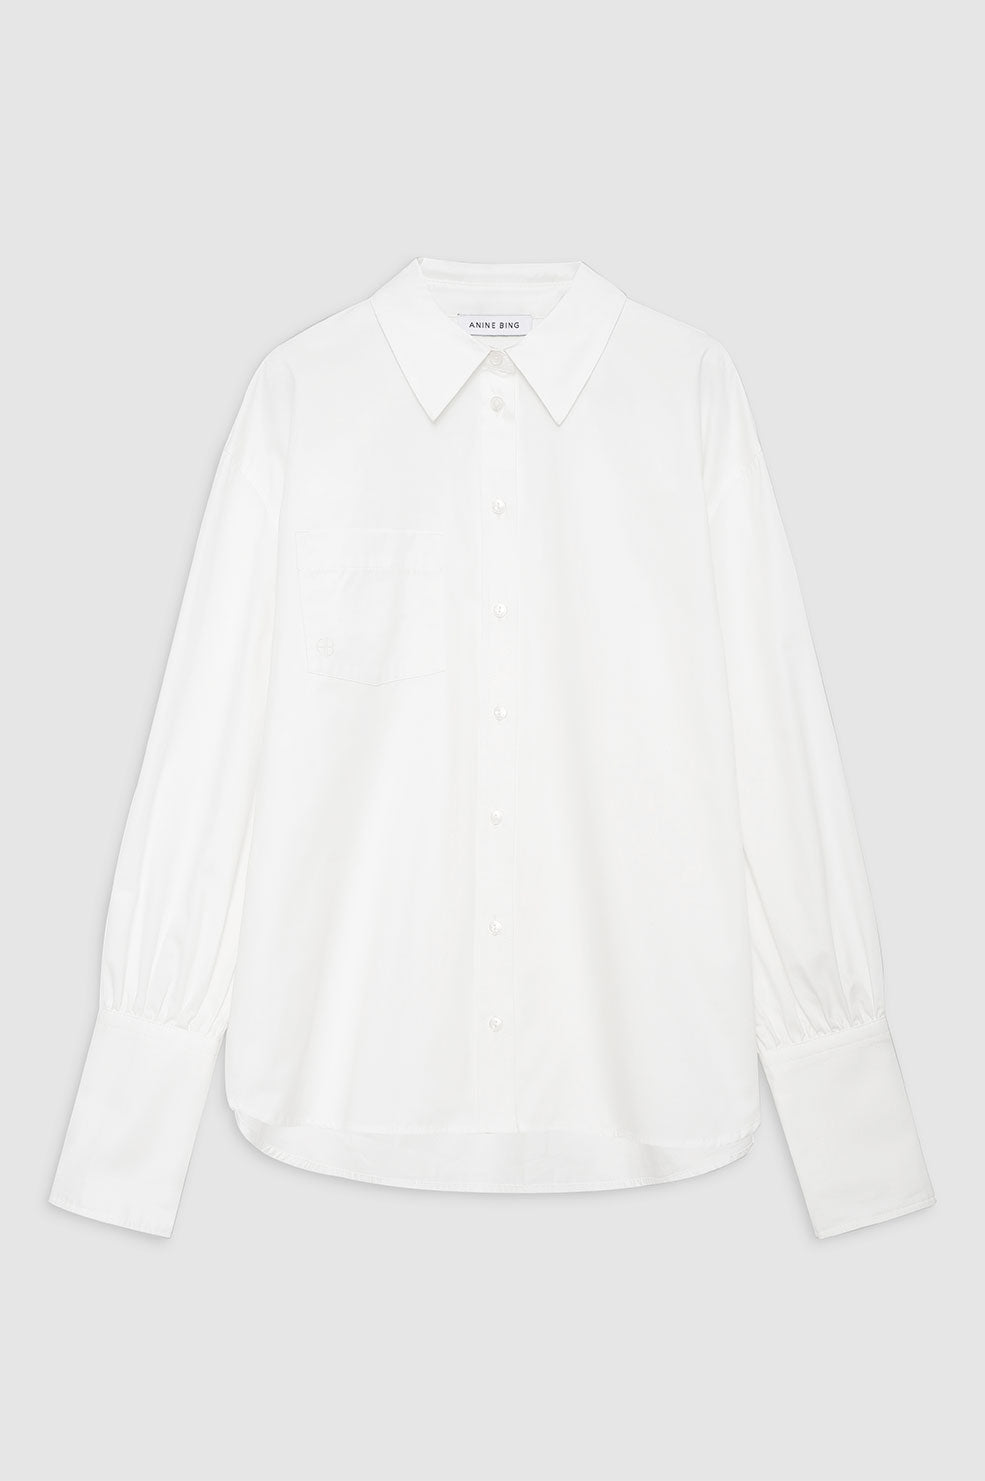 ANINE BING Maxine Shirt - White - Front View